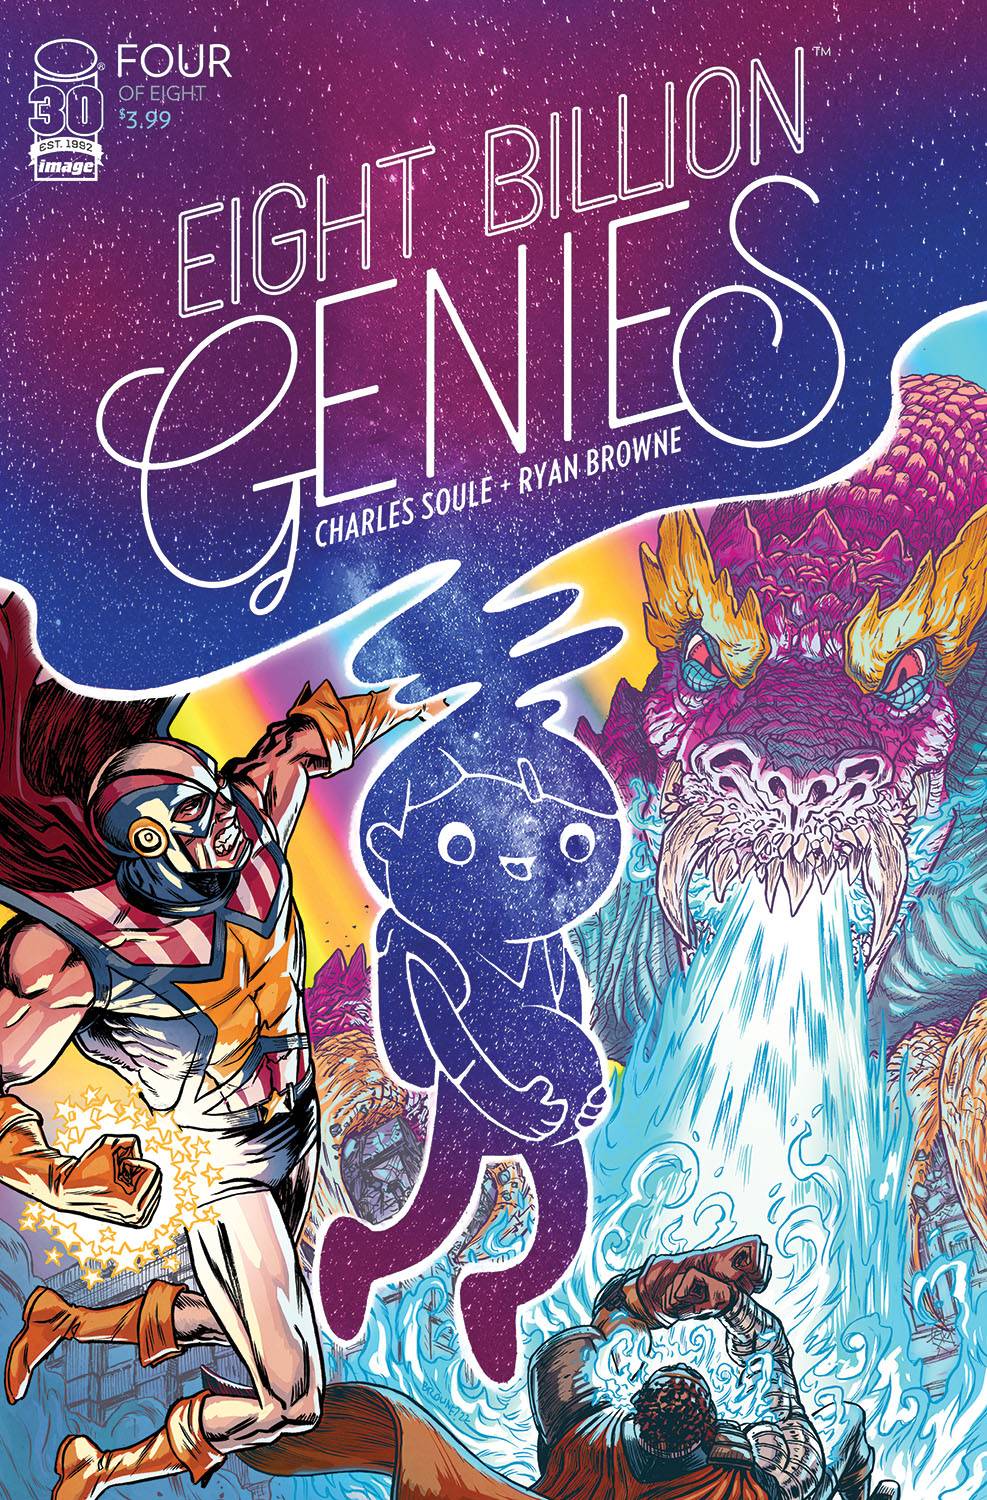 Eight Billion Genies #4 (Of 8) Cvr A Browne - State of Comics